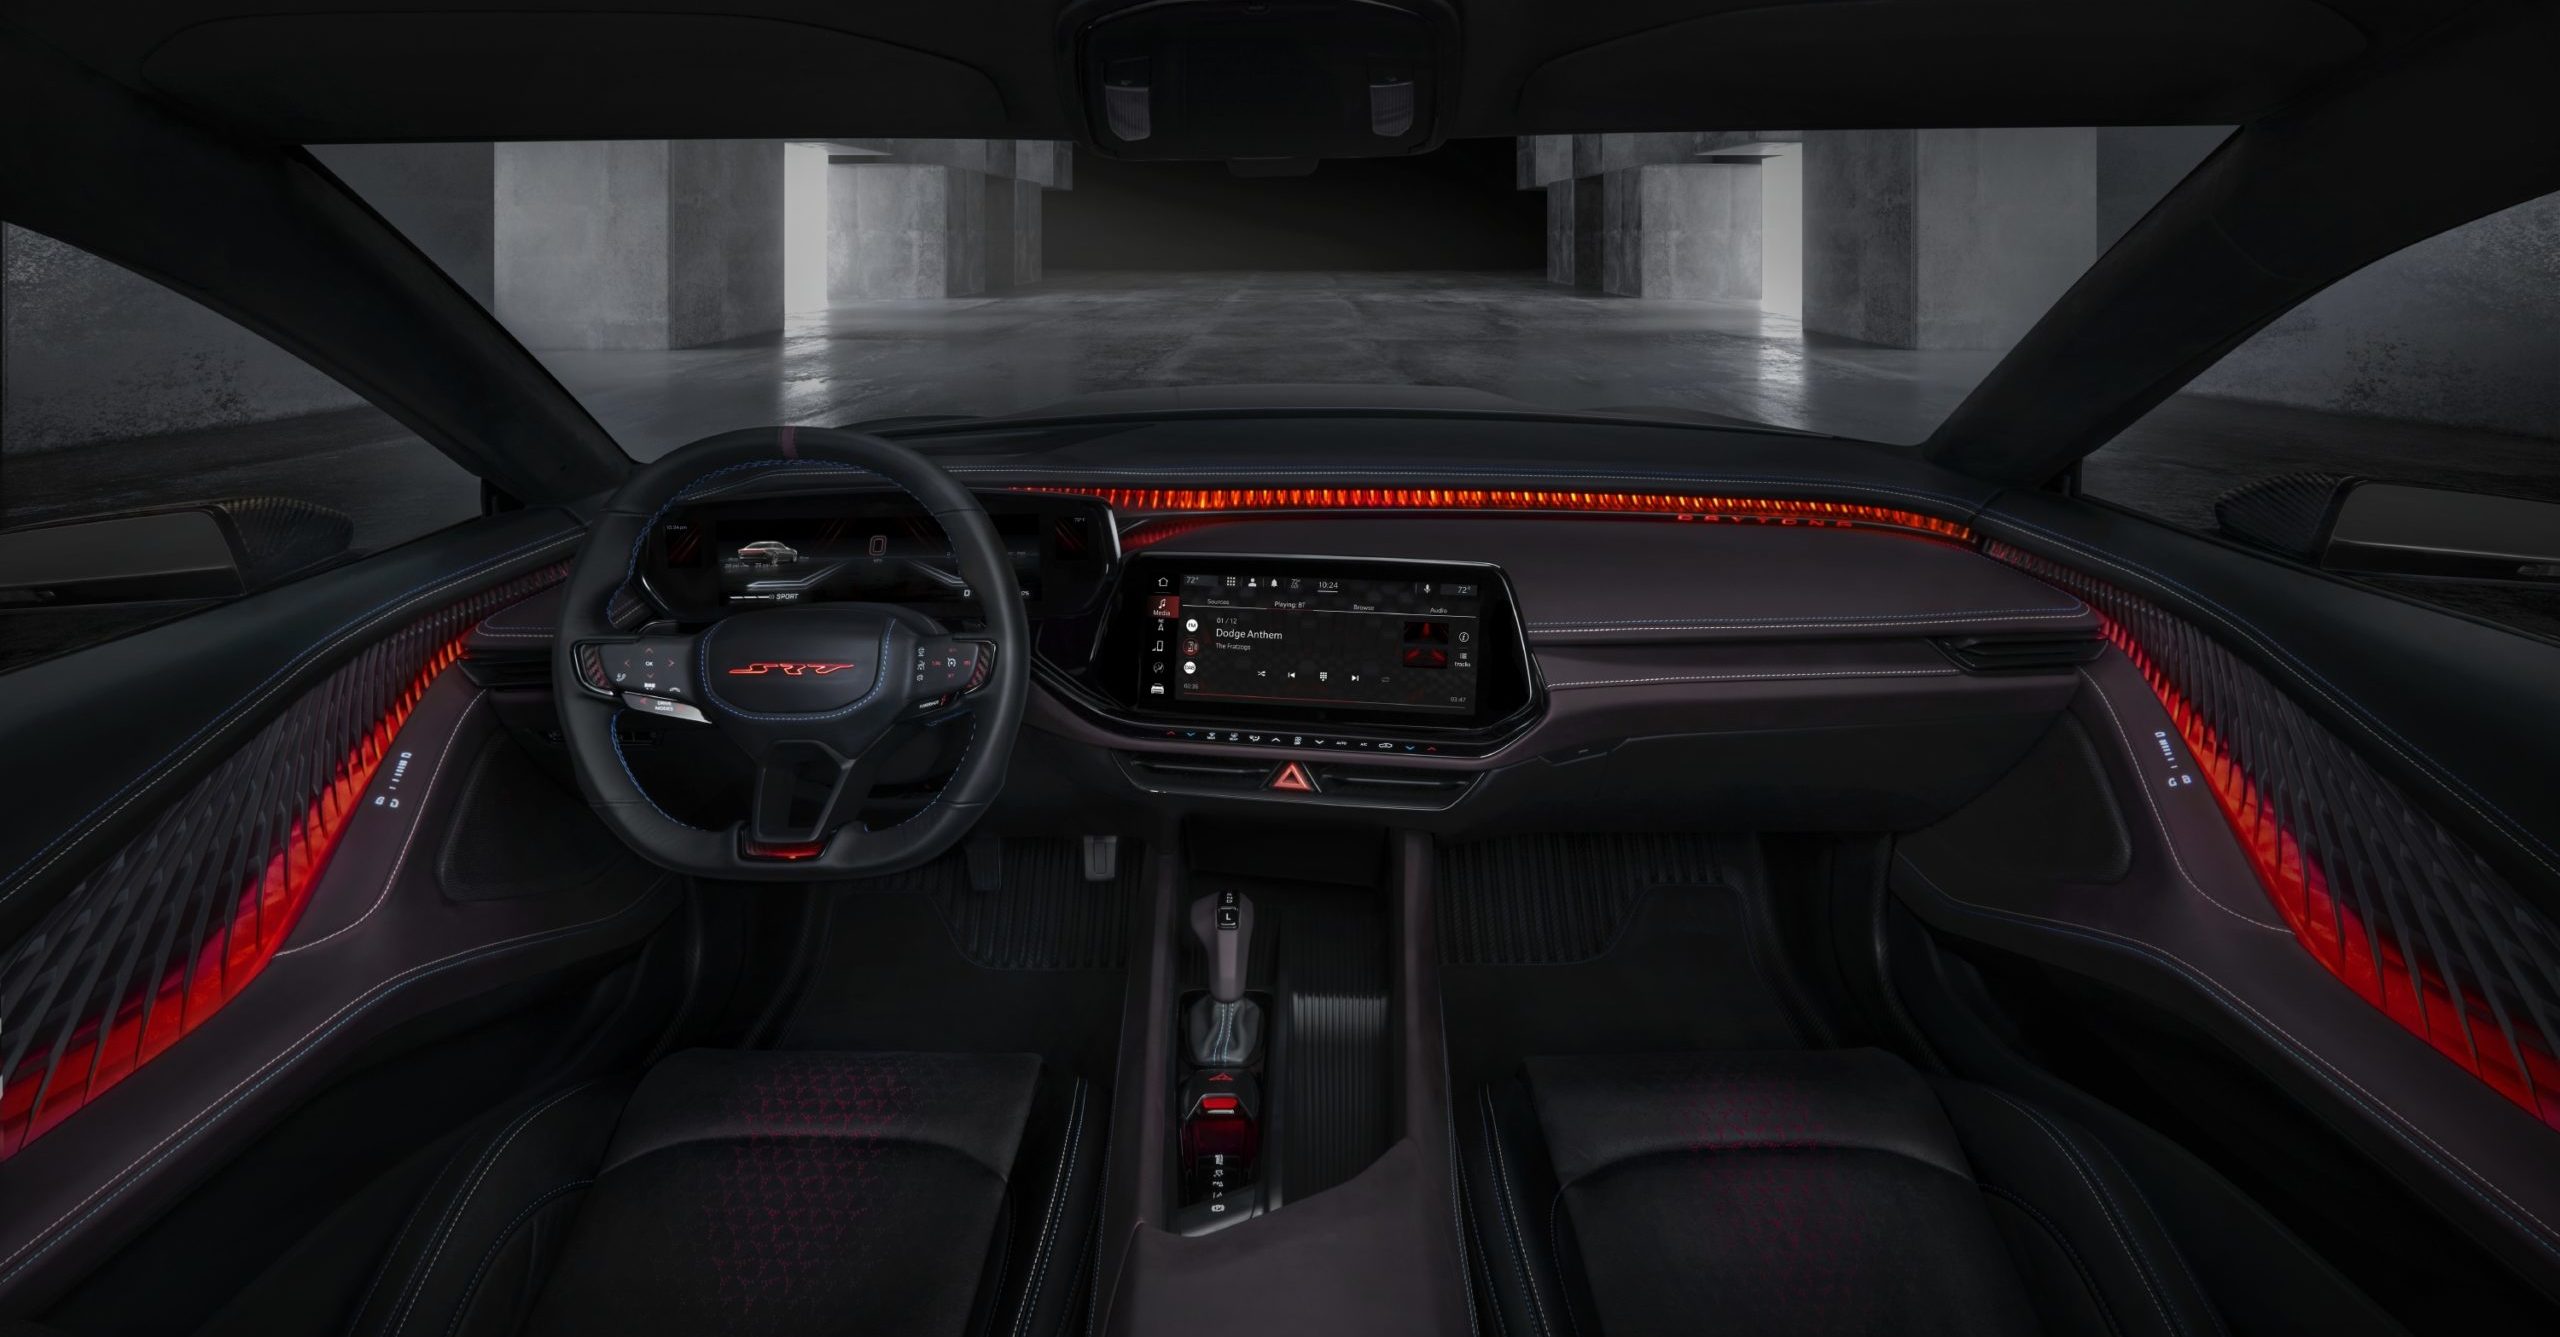 The Dodge Charger Daytona SRT Concept’s interior